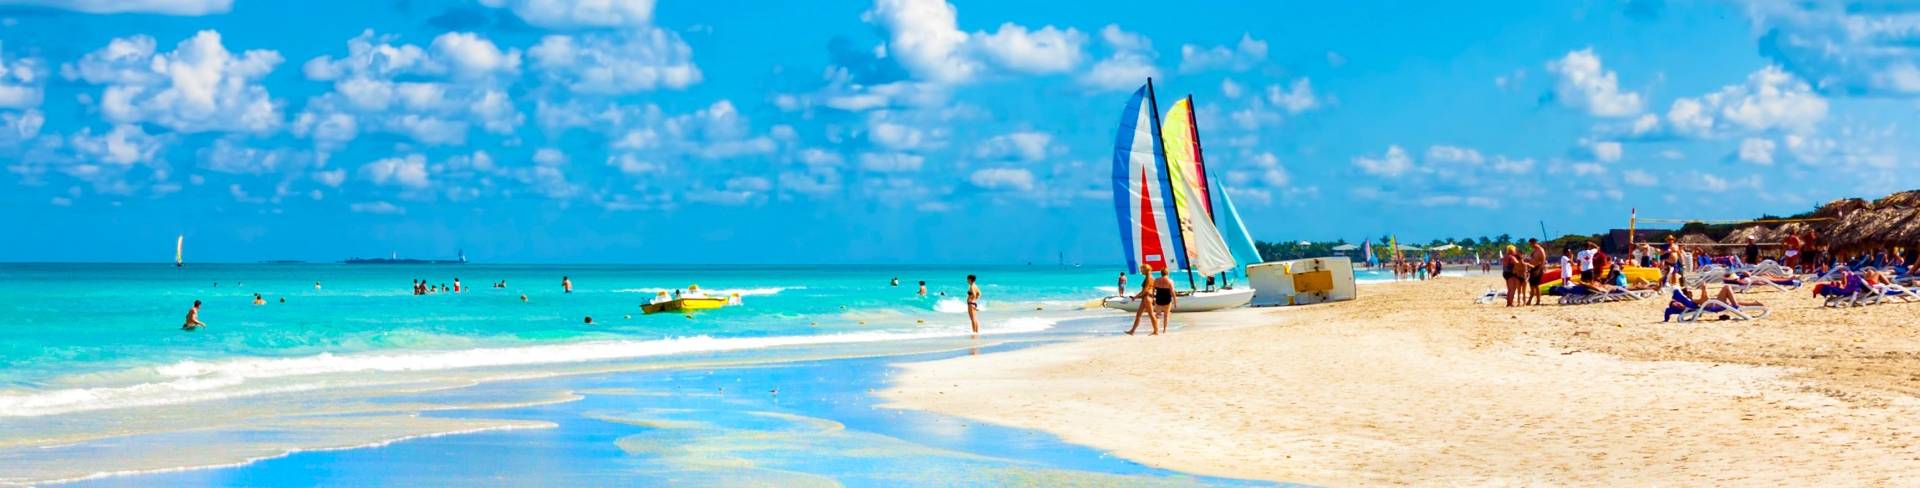 Варадеро - пляжный курорт на Кубе